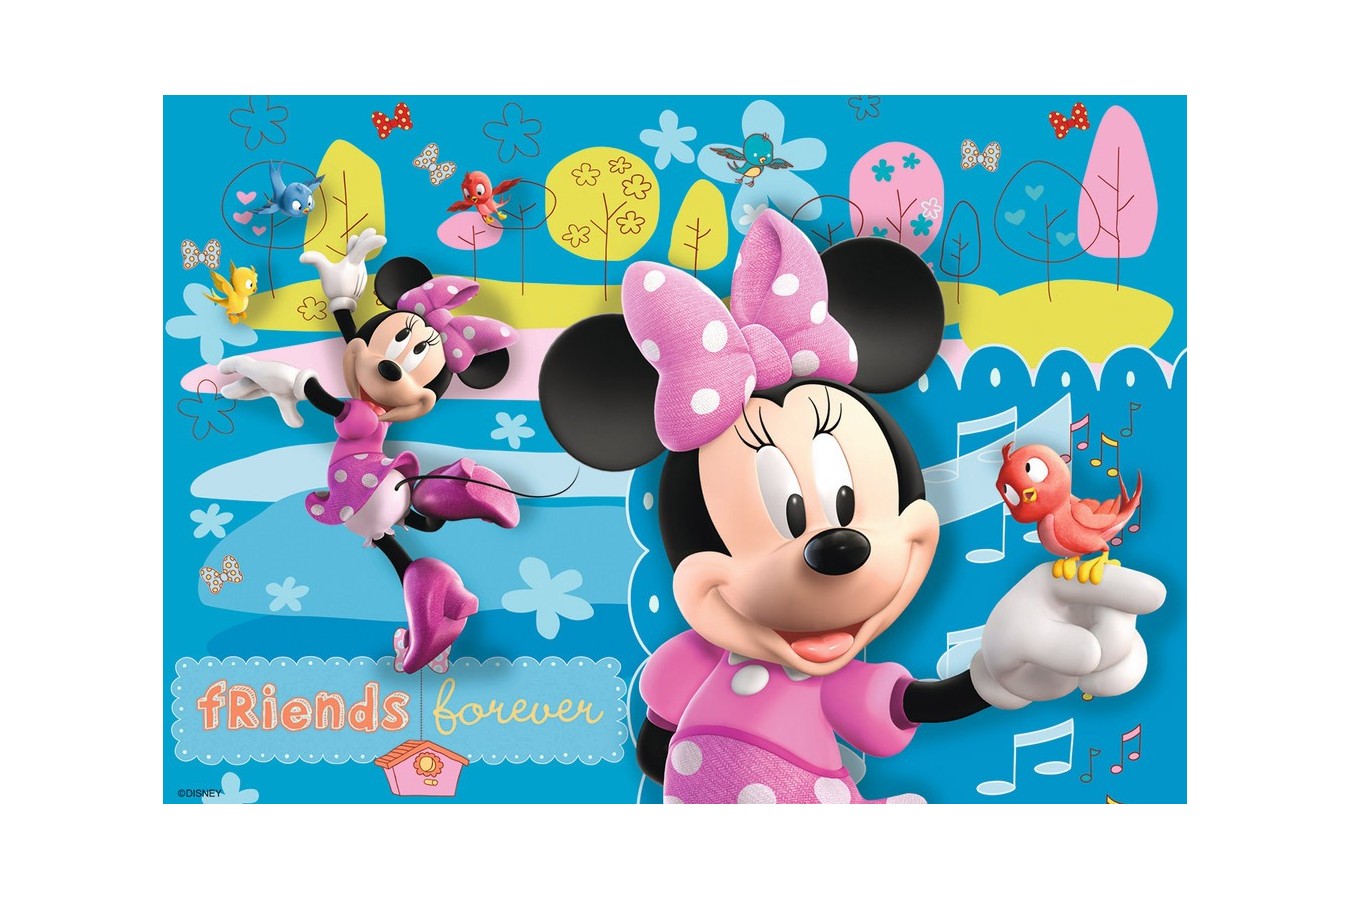 Puzzle Ravensburger - Minnie Mouse, 2x24 piese (08862)